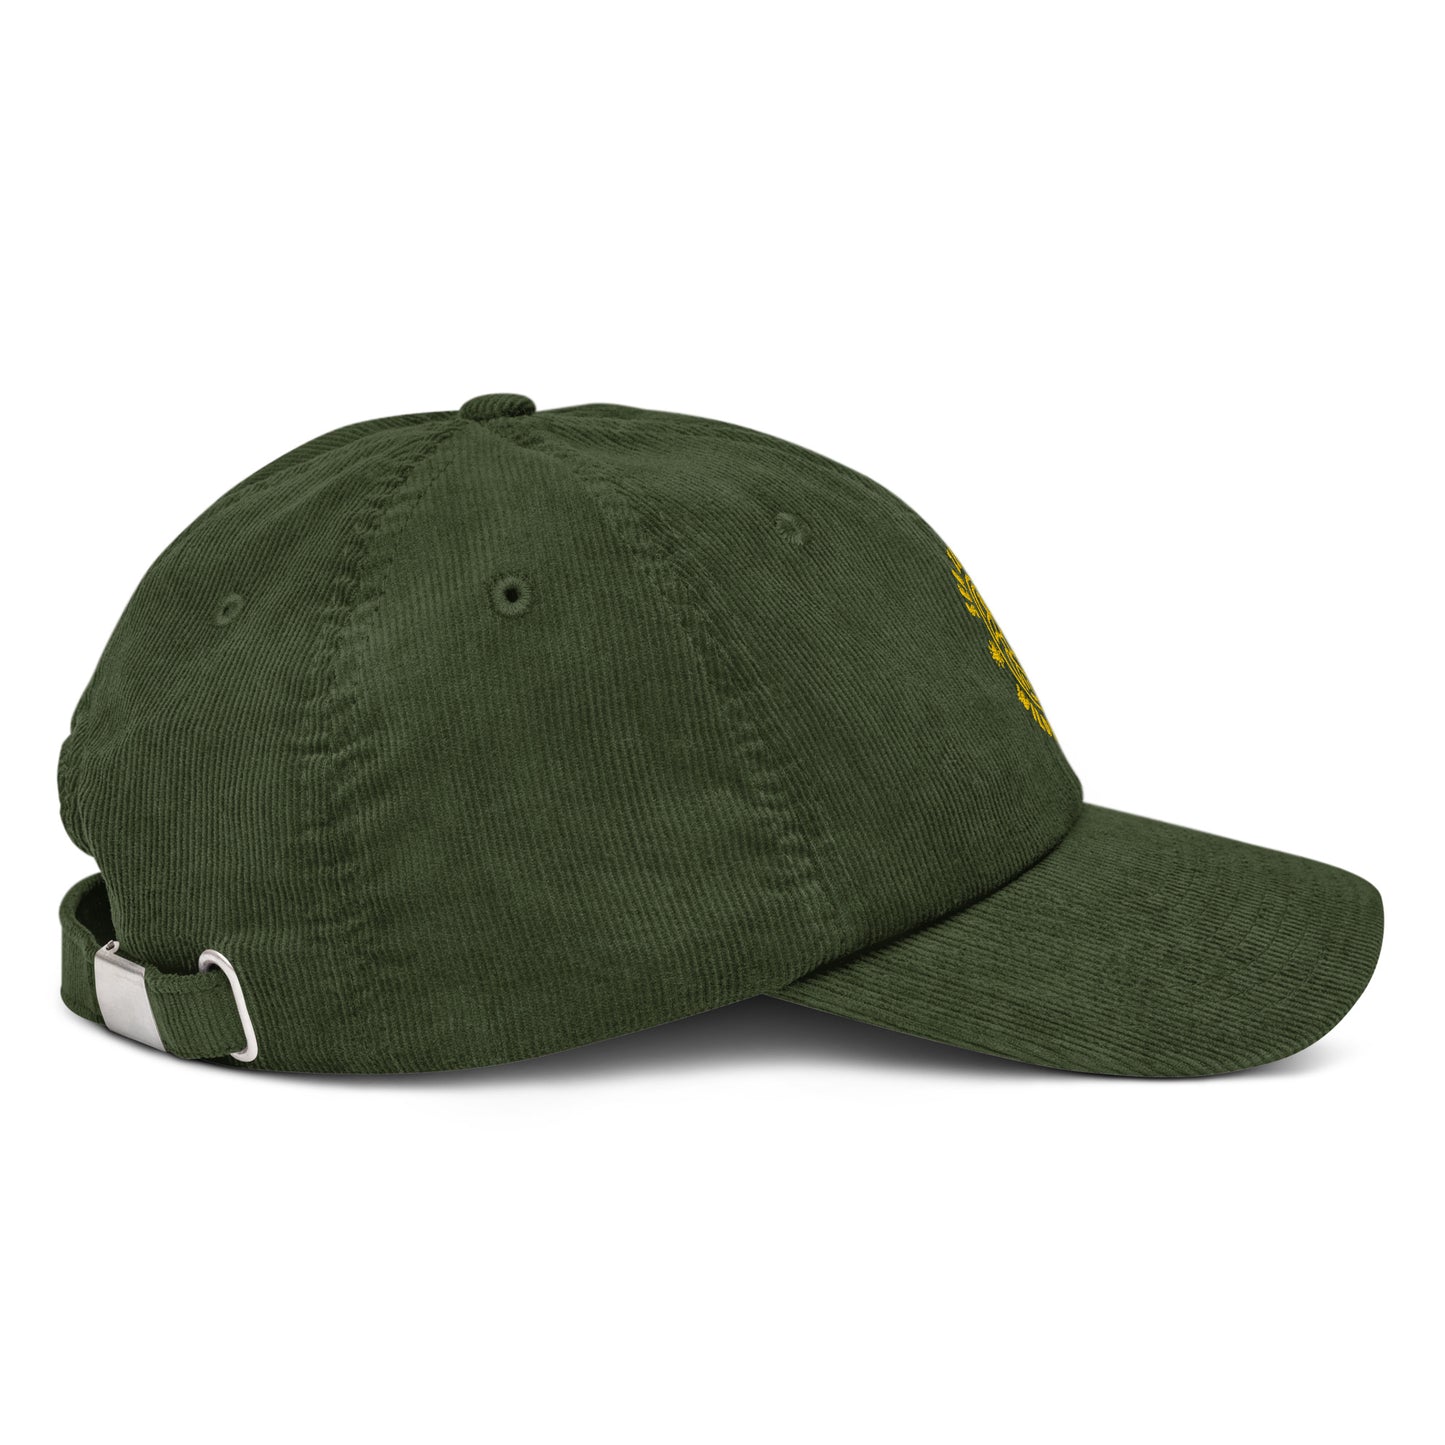 Sea Zephyr corduroy hat - green